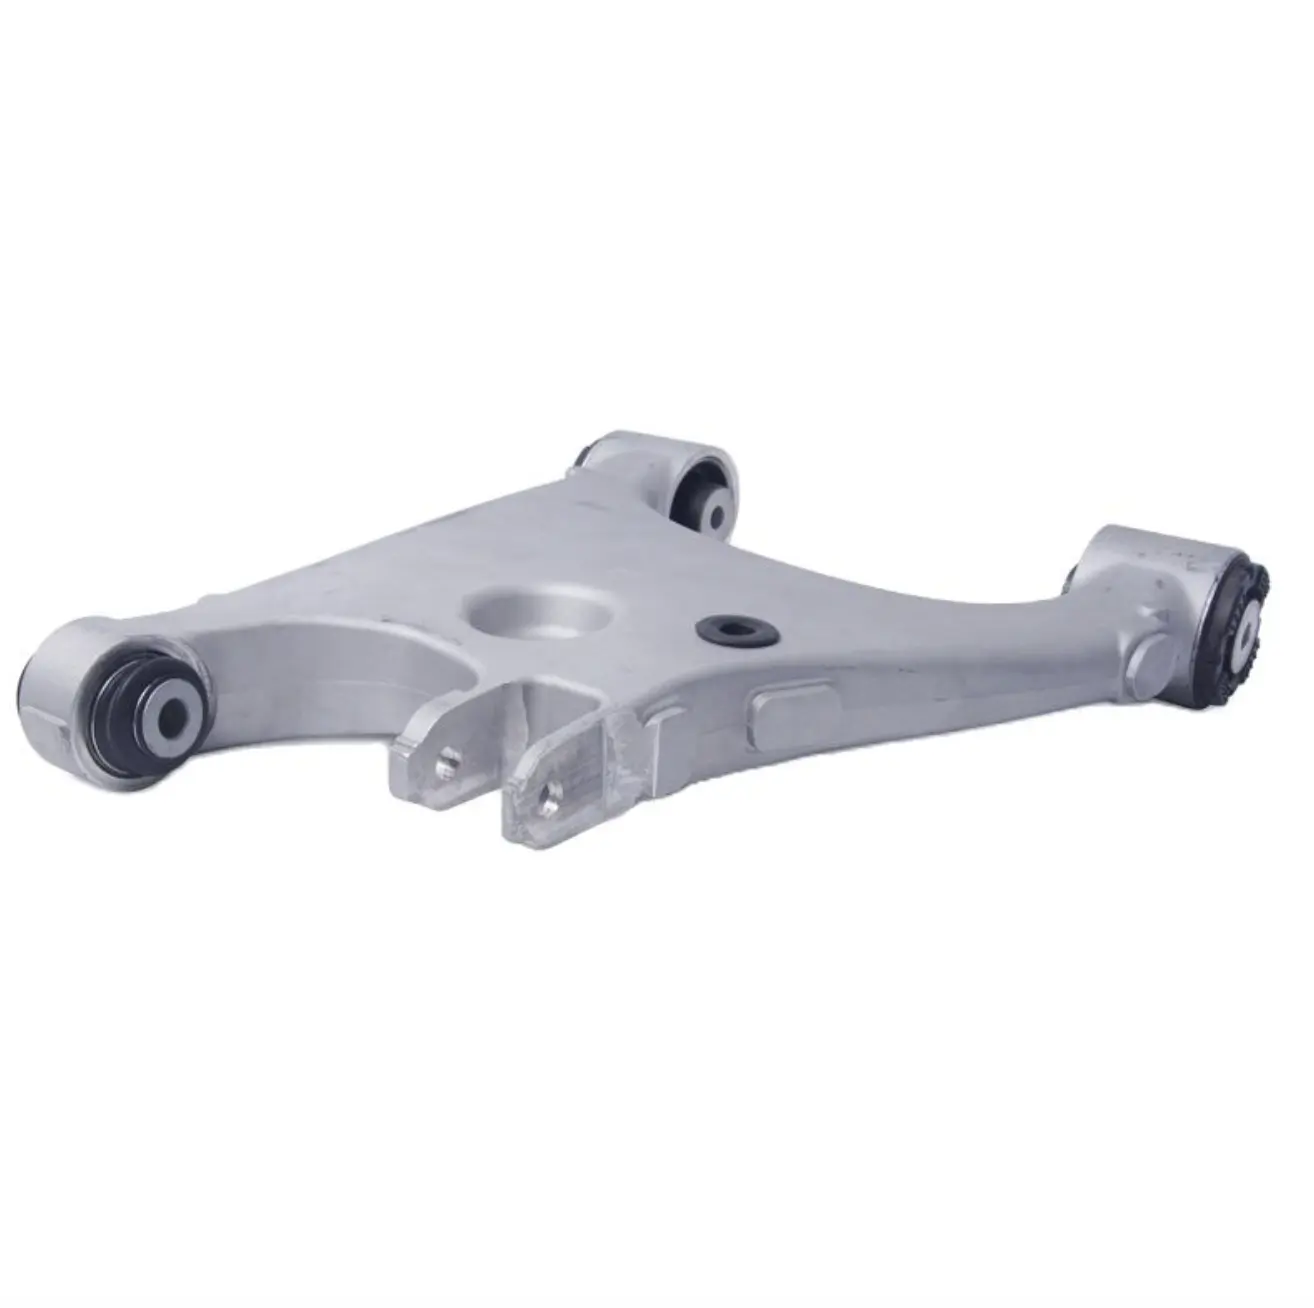 Scap OEM 6006774 00 B Rear Lower Suspension Control Arm For TESLA Model S 2014-2020 1021416-00-D 1027451-00-F